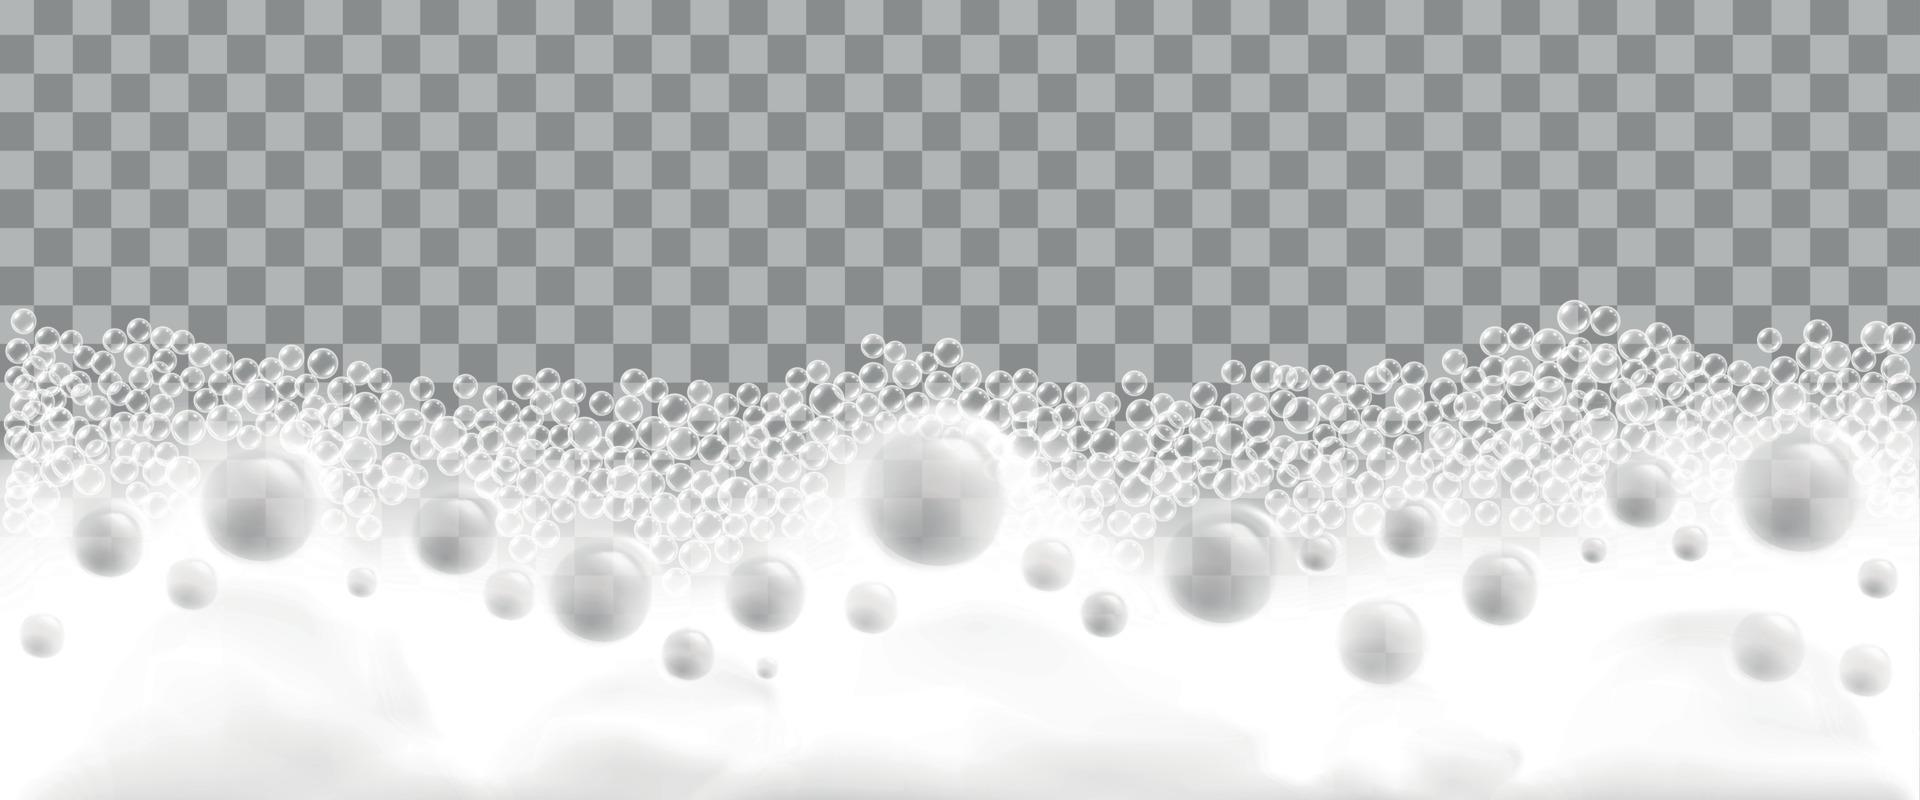 Realistic Foam Concept vector